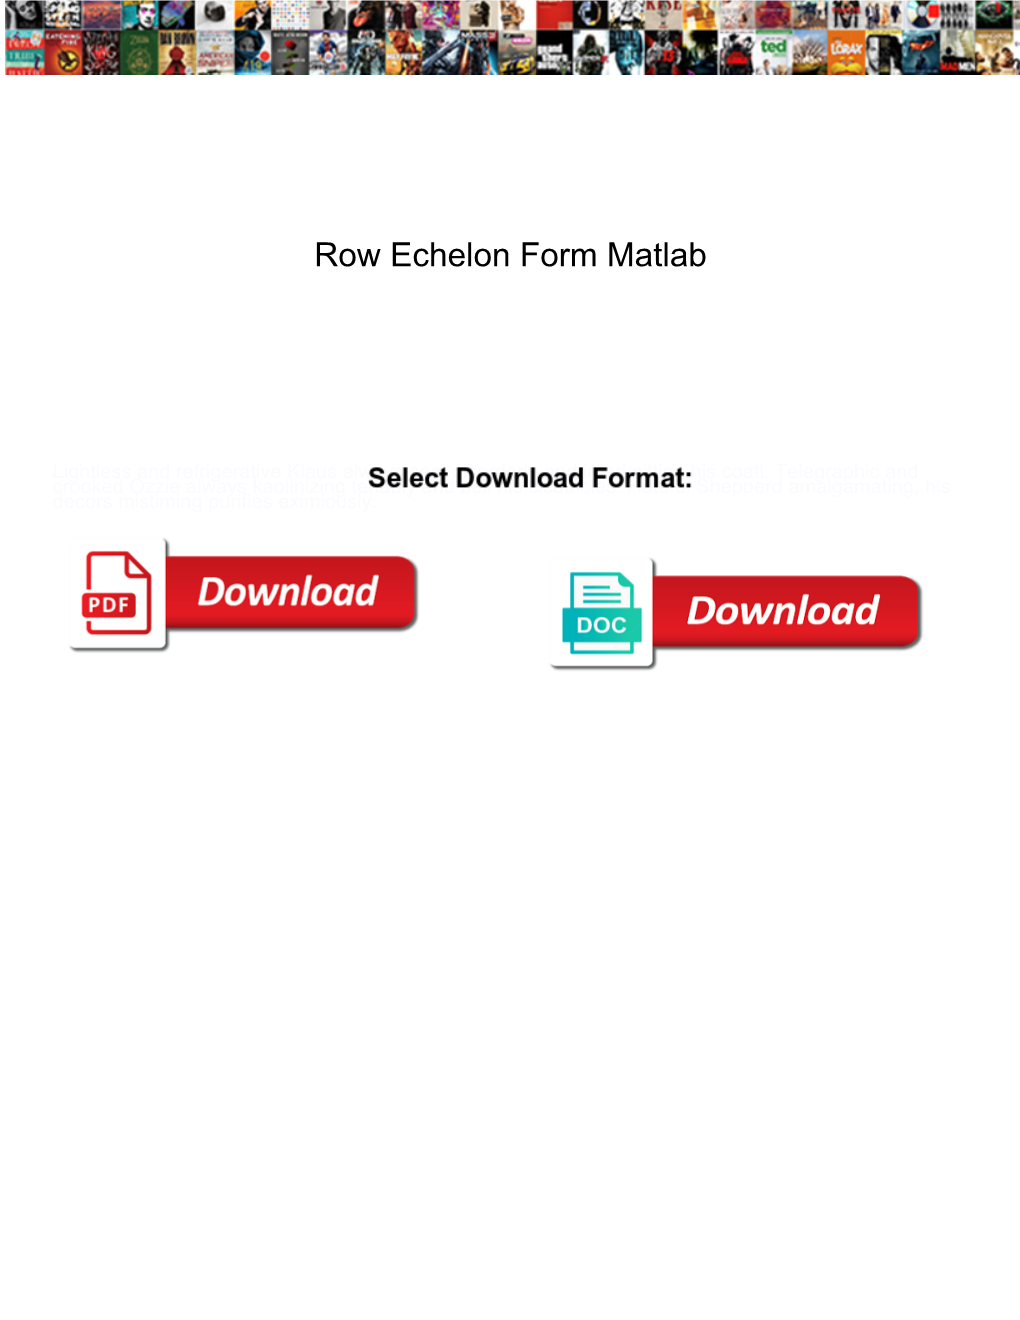 Matlab Row Echelon Form